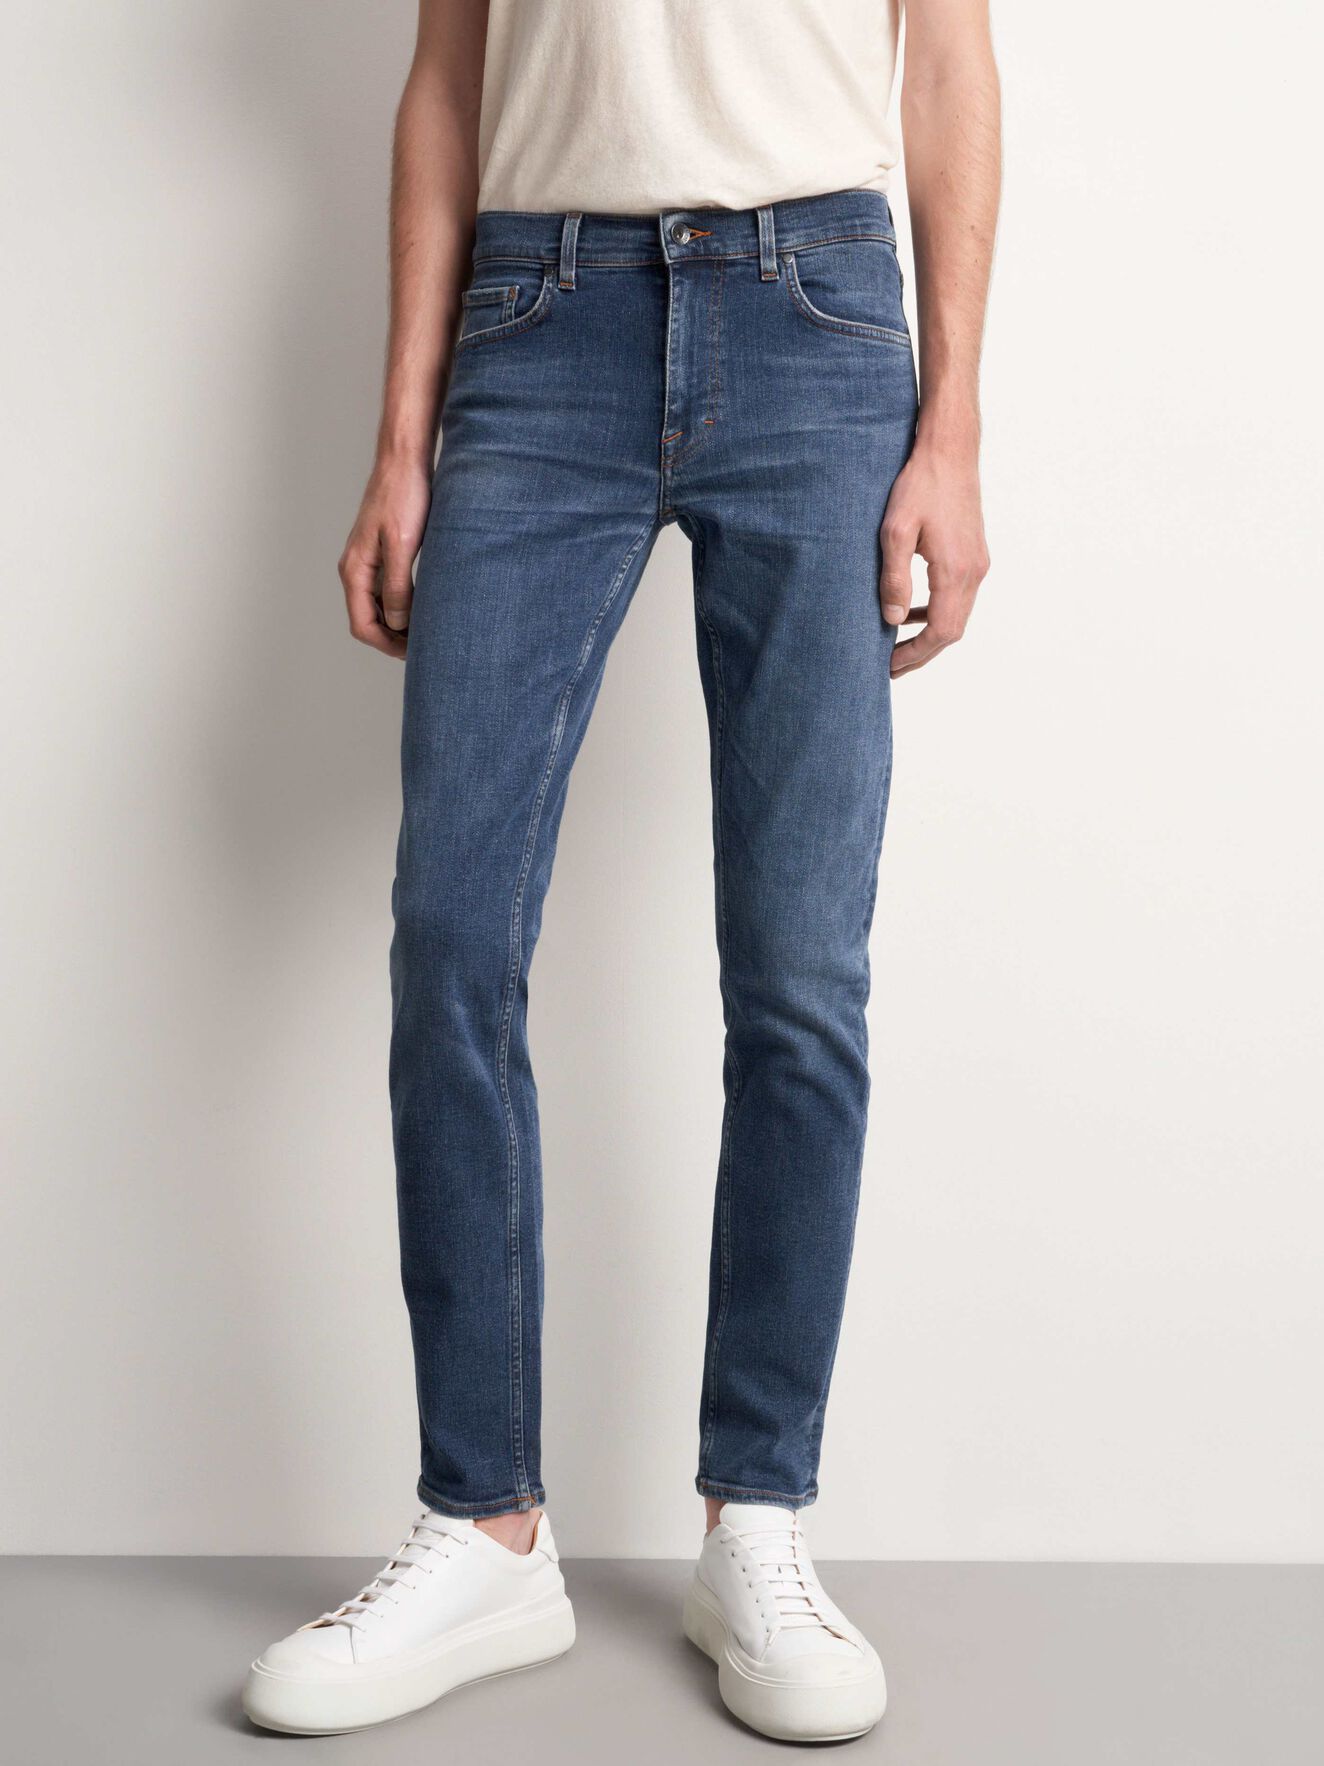 Leon Jeans - Buy Jeans online